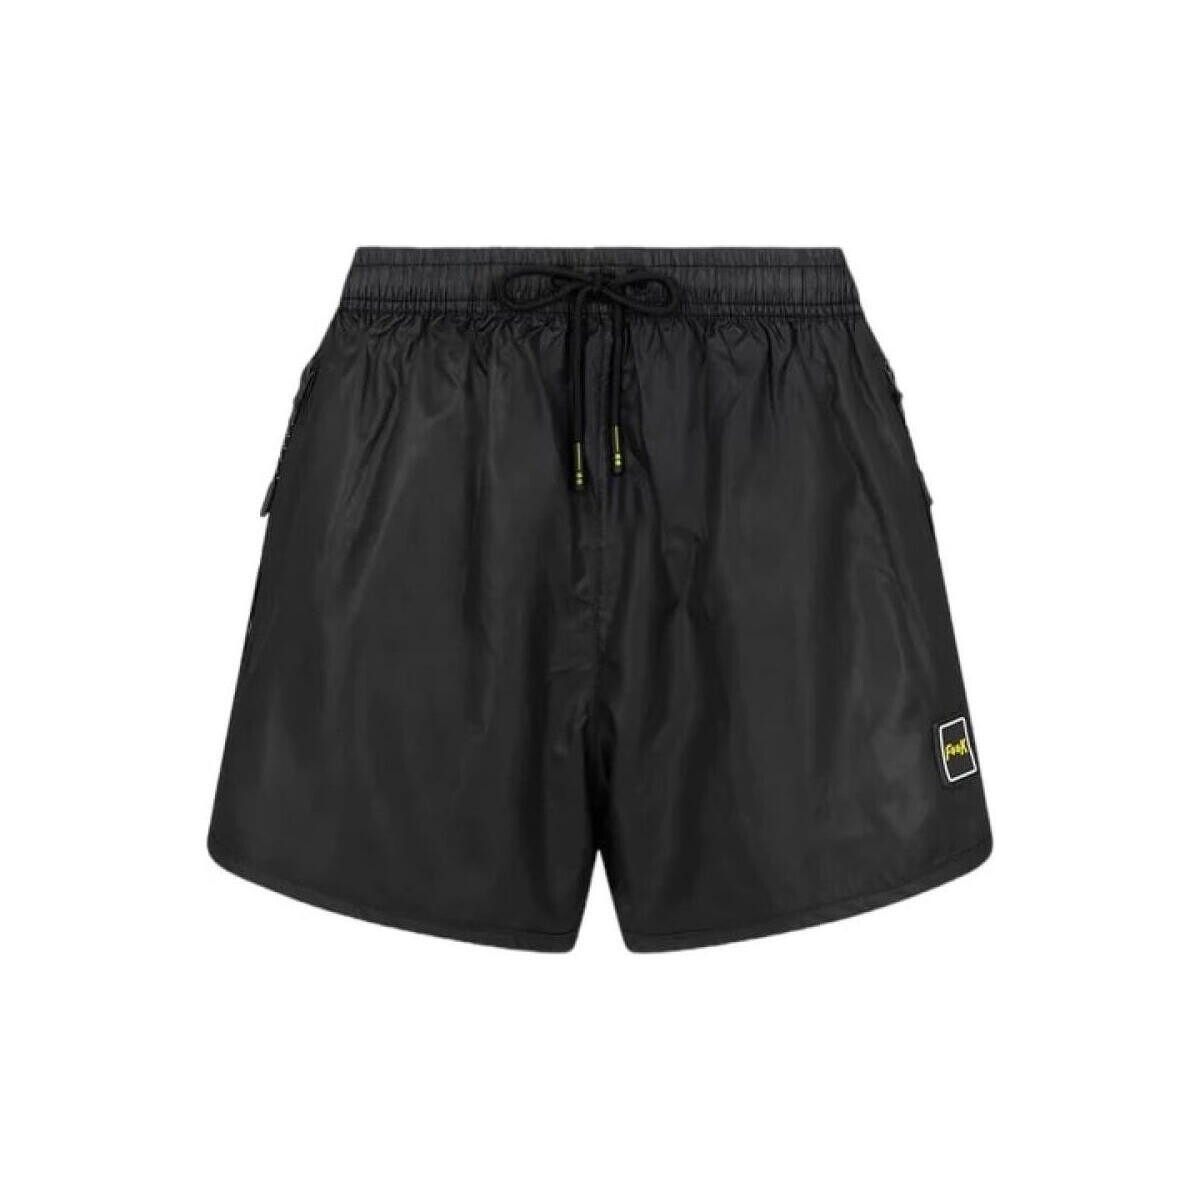 Vêtements Femme Shorts / Bermudas F * * K 9259 Noir